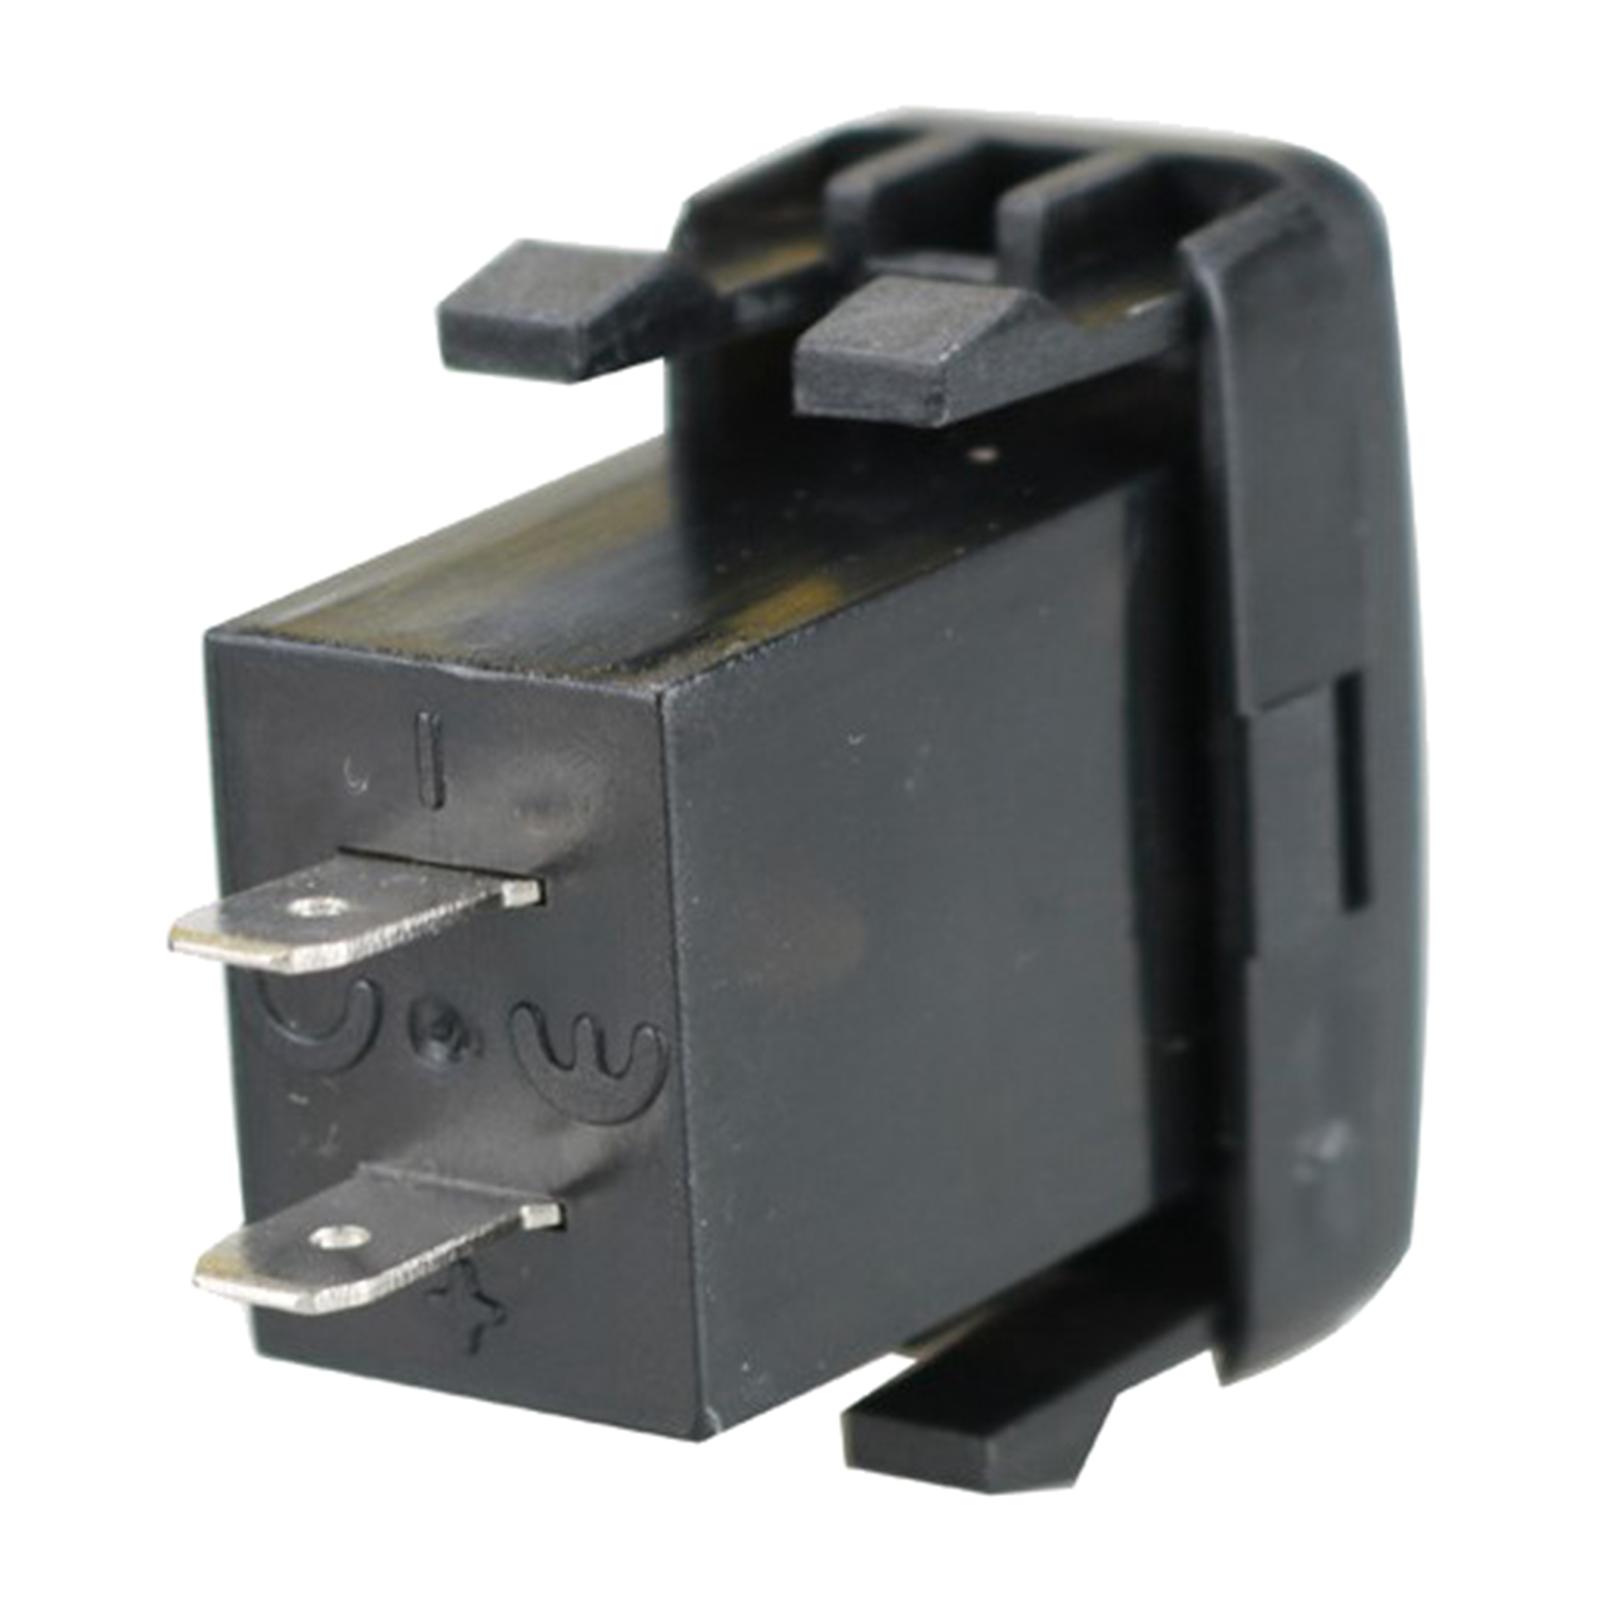 12-24V Mini Car Charger Socket Adapter Voltmeter Display for Toyota Red